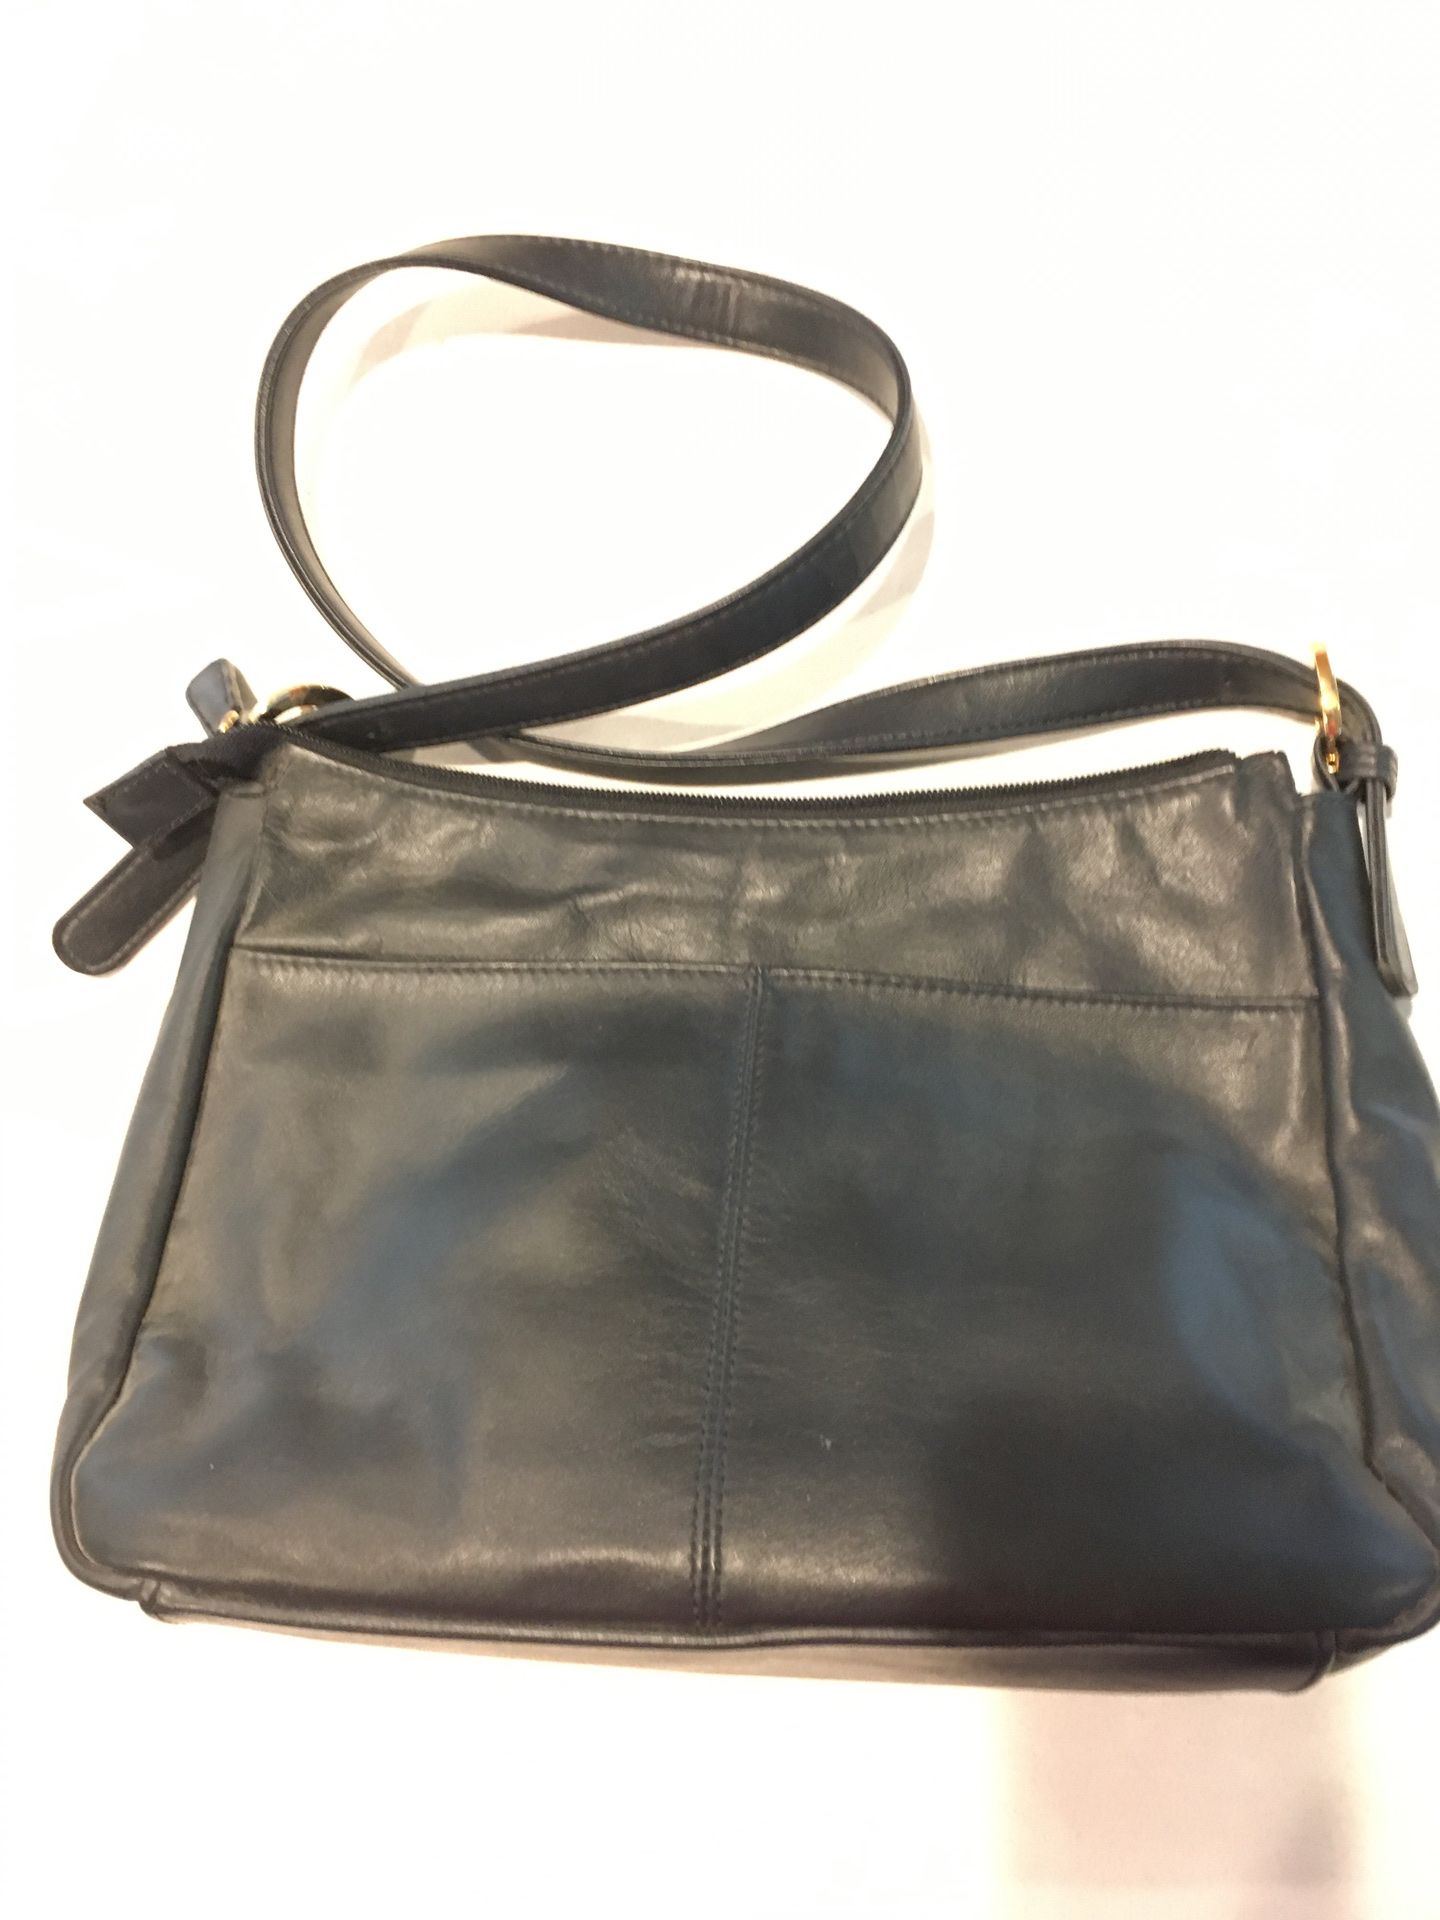 Giani Bernini leather over shoulder handbag